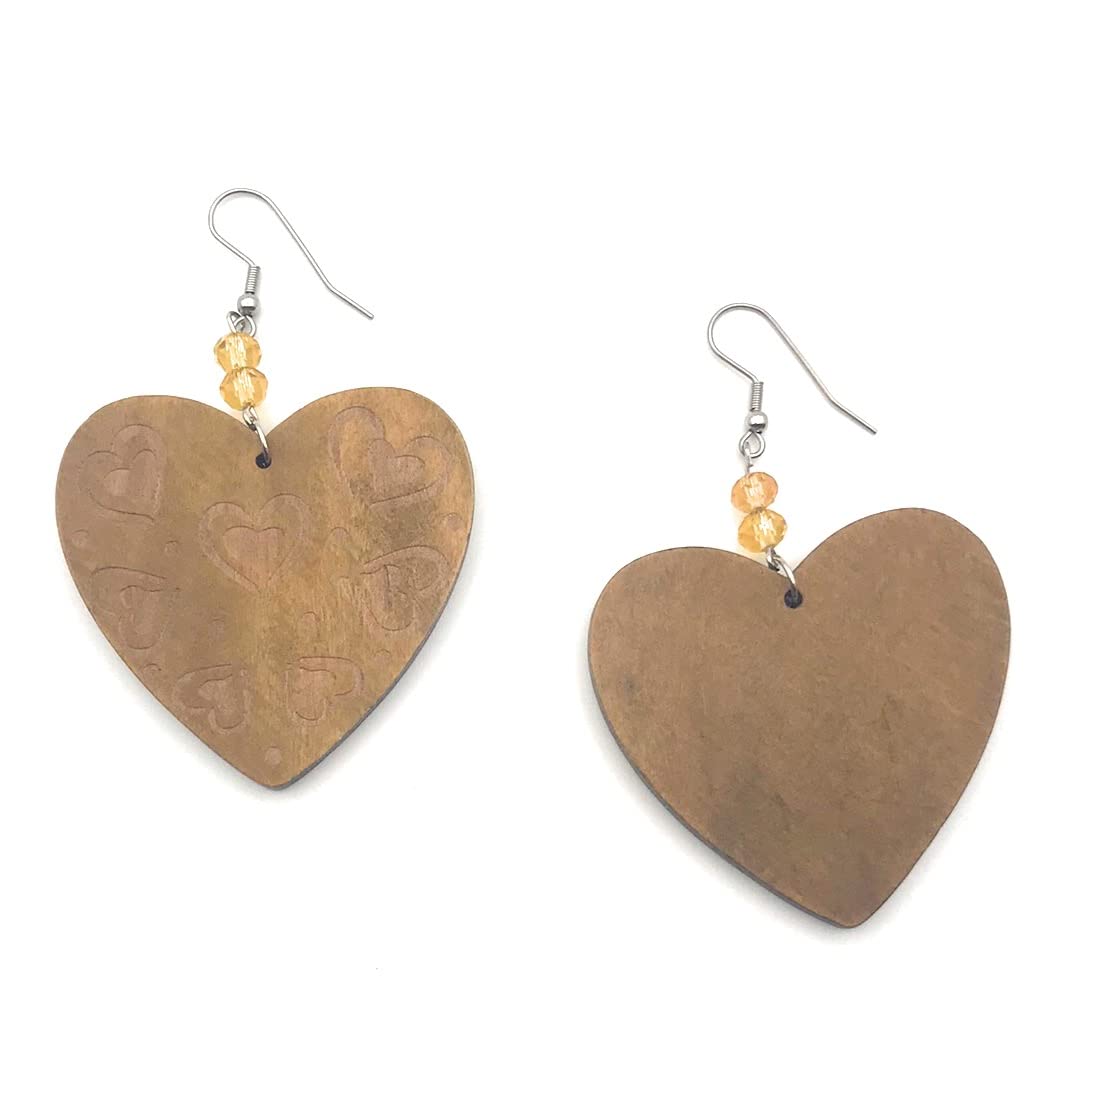 Wood Heart Swirl Pattern Earrings Front and Back from Scott D Jewelry Designs